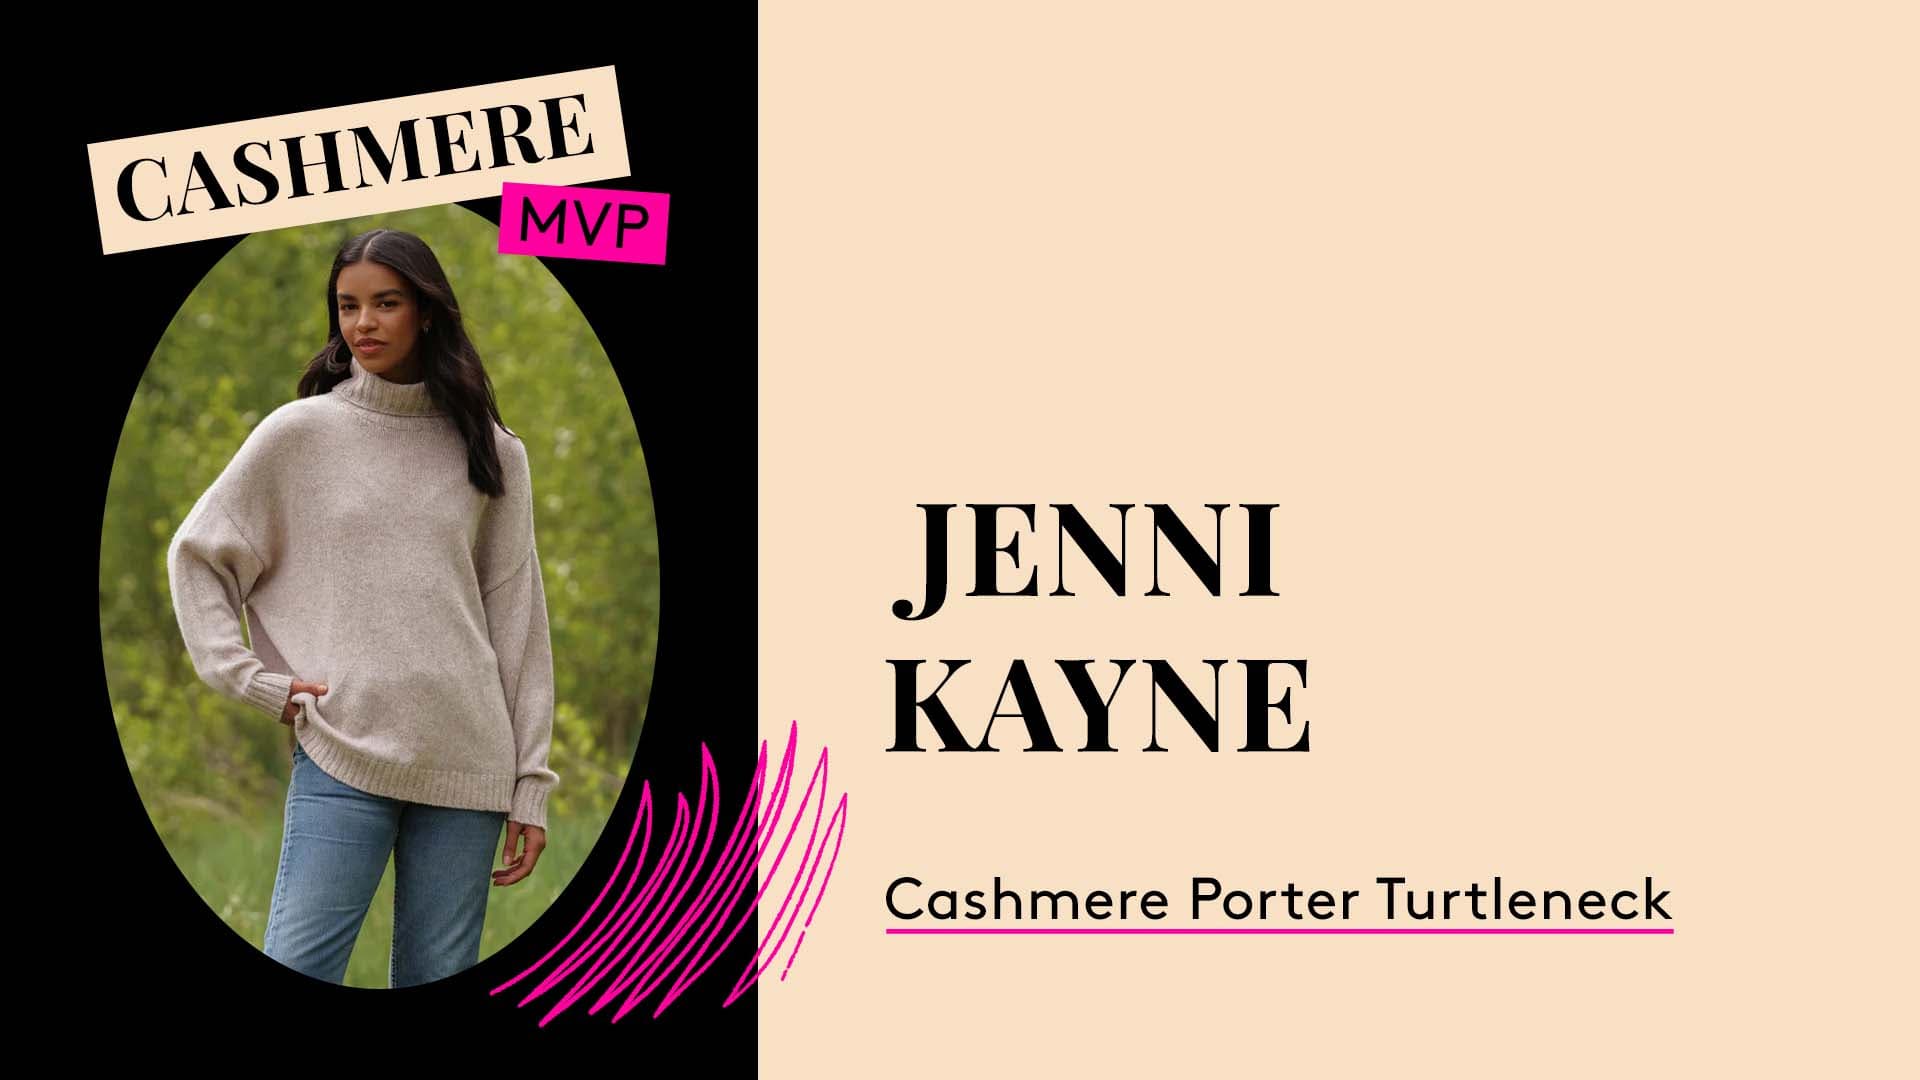 Cashmere MVP. Jenni Kayne Cashmere Porter Turtleneck.